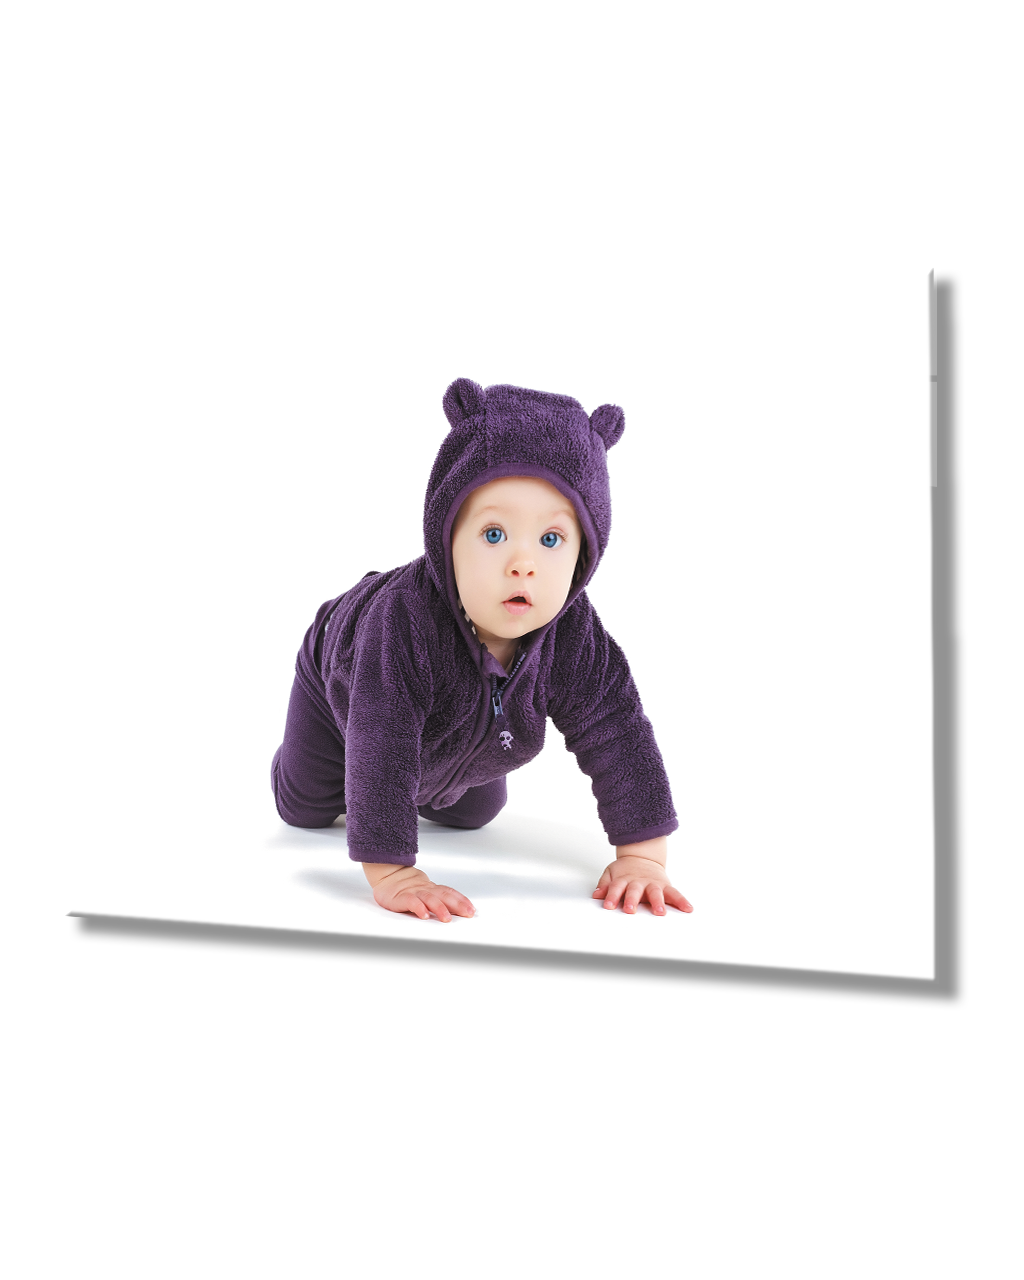 Mor Kıyafetli Bebek Cam Tablo  4mm Dayanıklı Temperli Cam Purple Dressed Baby Glass Table 4mm Durable Tempered Glass